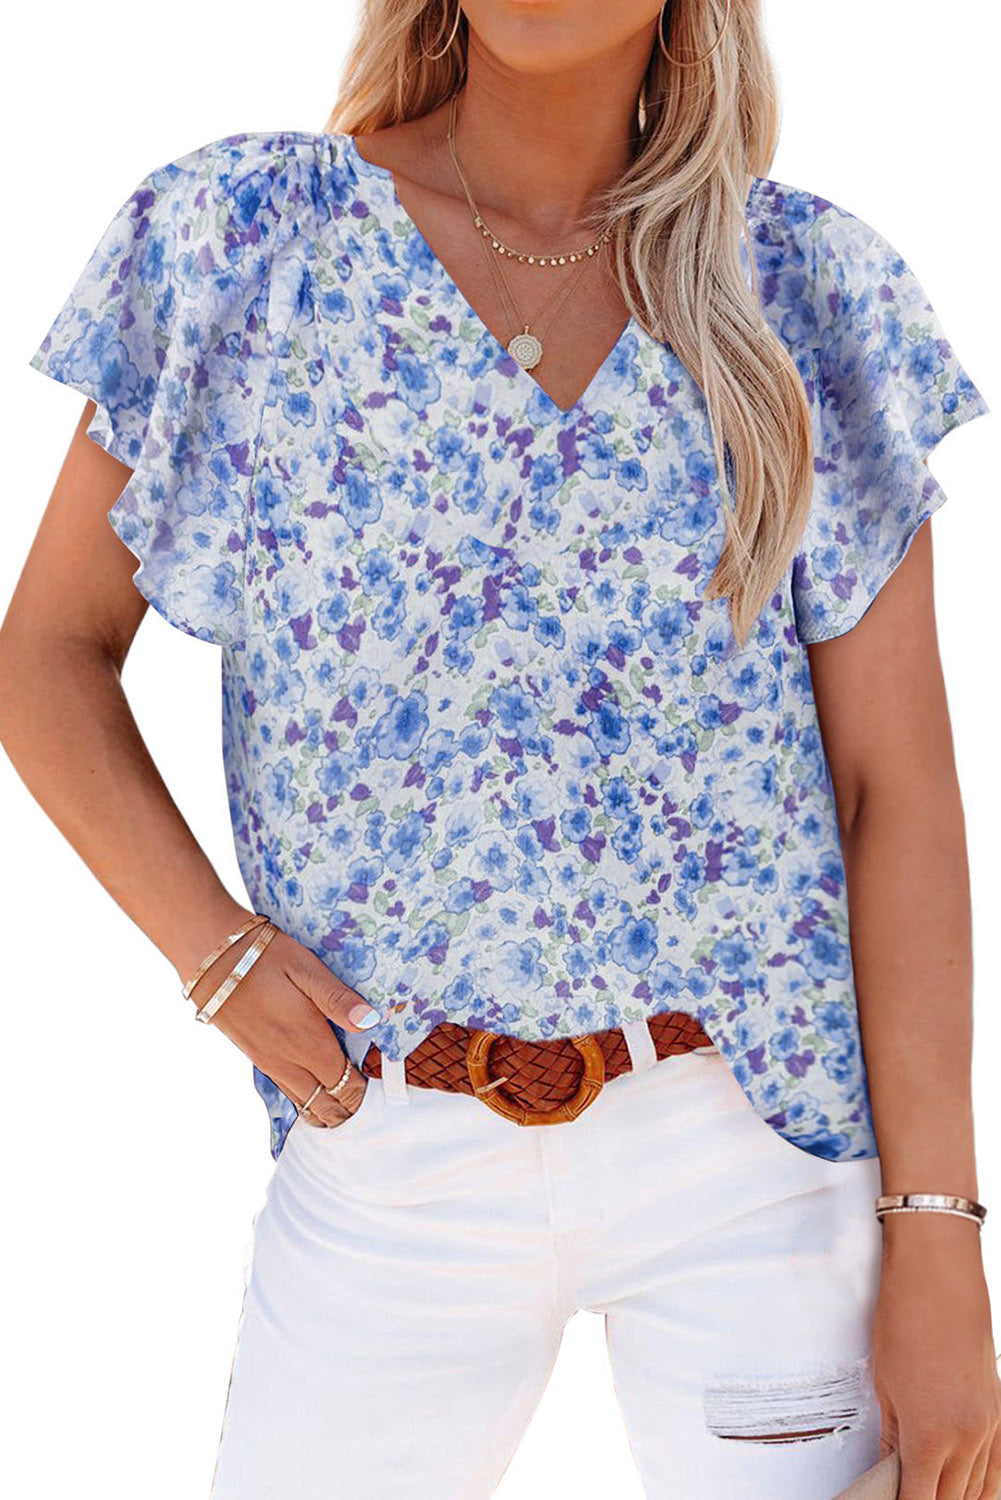 LC25114556-5-S, LC25114556-5-M, LC25114556-5-L, LC25114556-5-XL, LC25114556-5-2XL, Blue Women's Casual Short Sleeve Ruffle Petals Shirts Summer Casual Floral Blouse Top